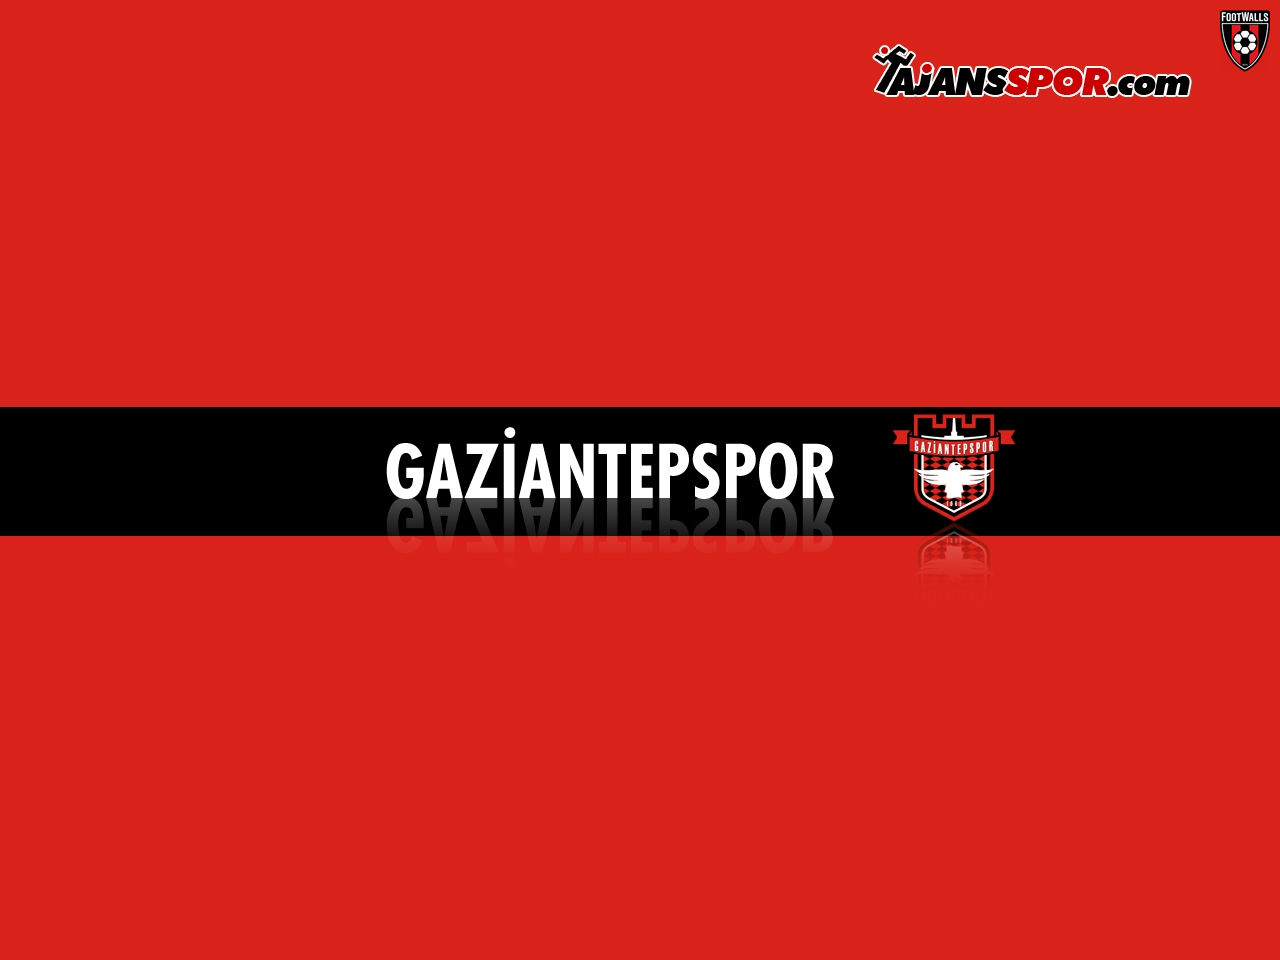 Gaziantepspor Wallpapers